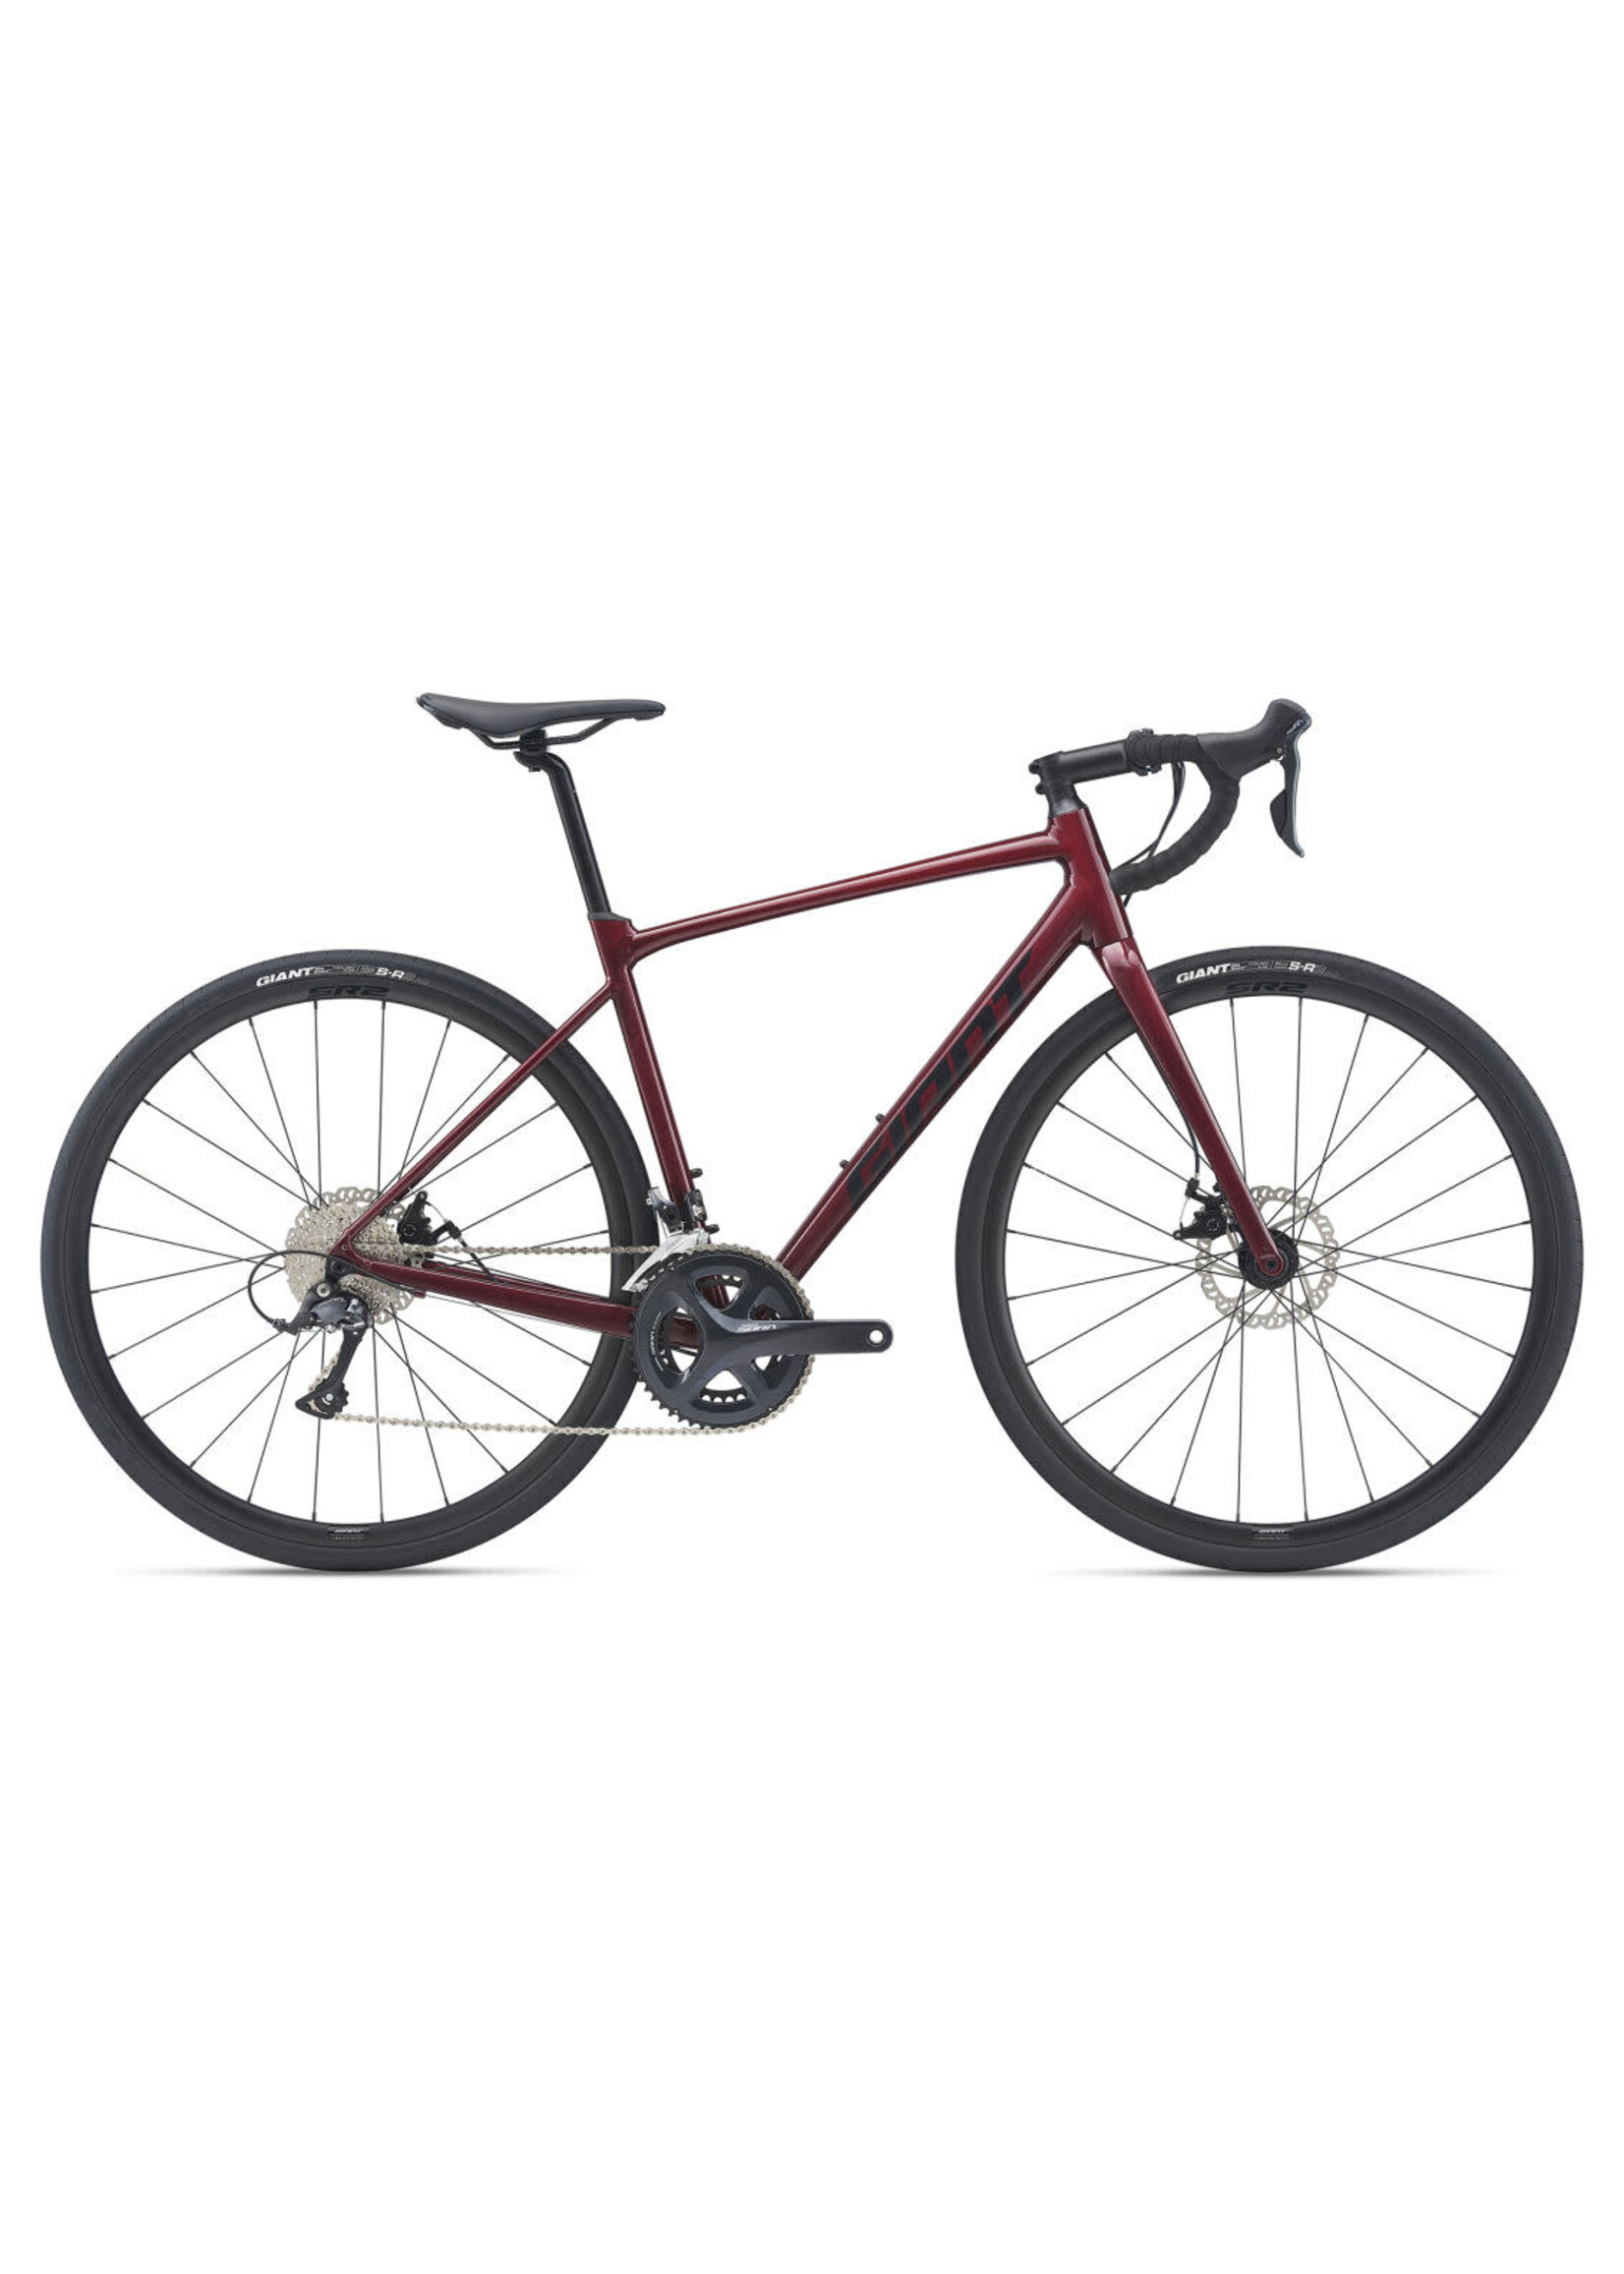 Giant CONTEND AR 3 (2020)ロードバイク - 自転車